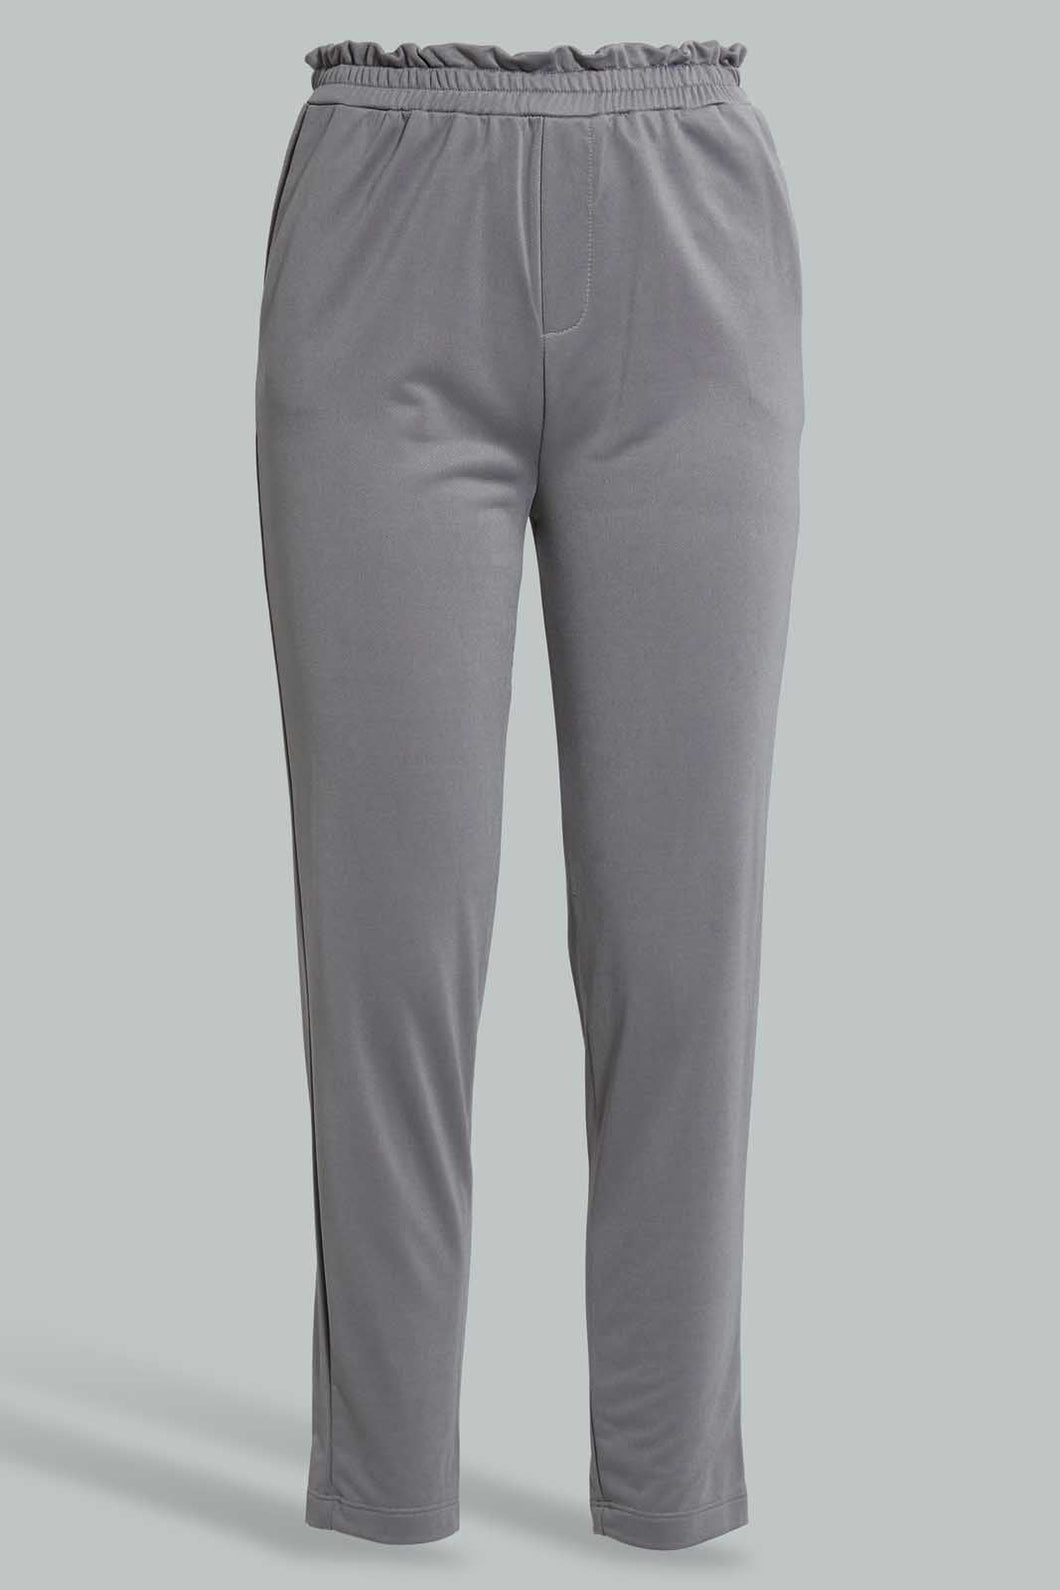 Grey Elasticated Pants For Girls بنطلون رمادي بخصر مطاطي للبنات الكبار